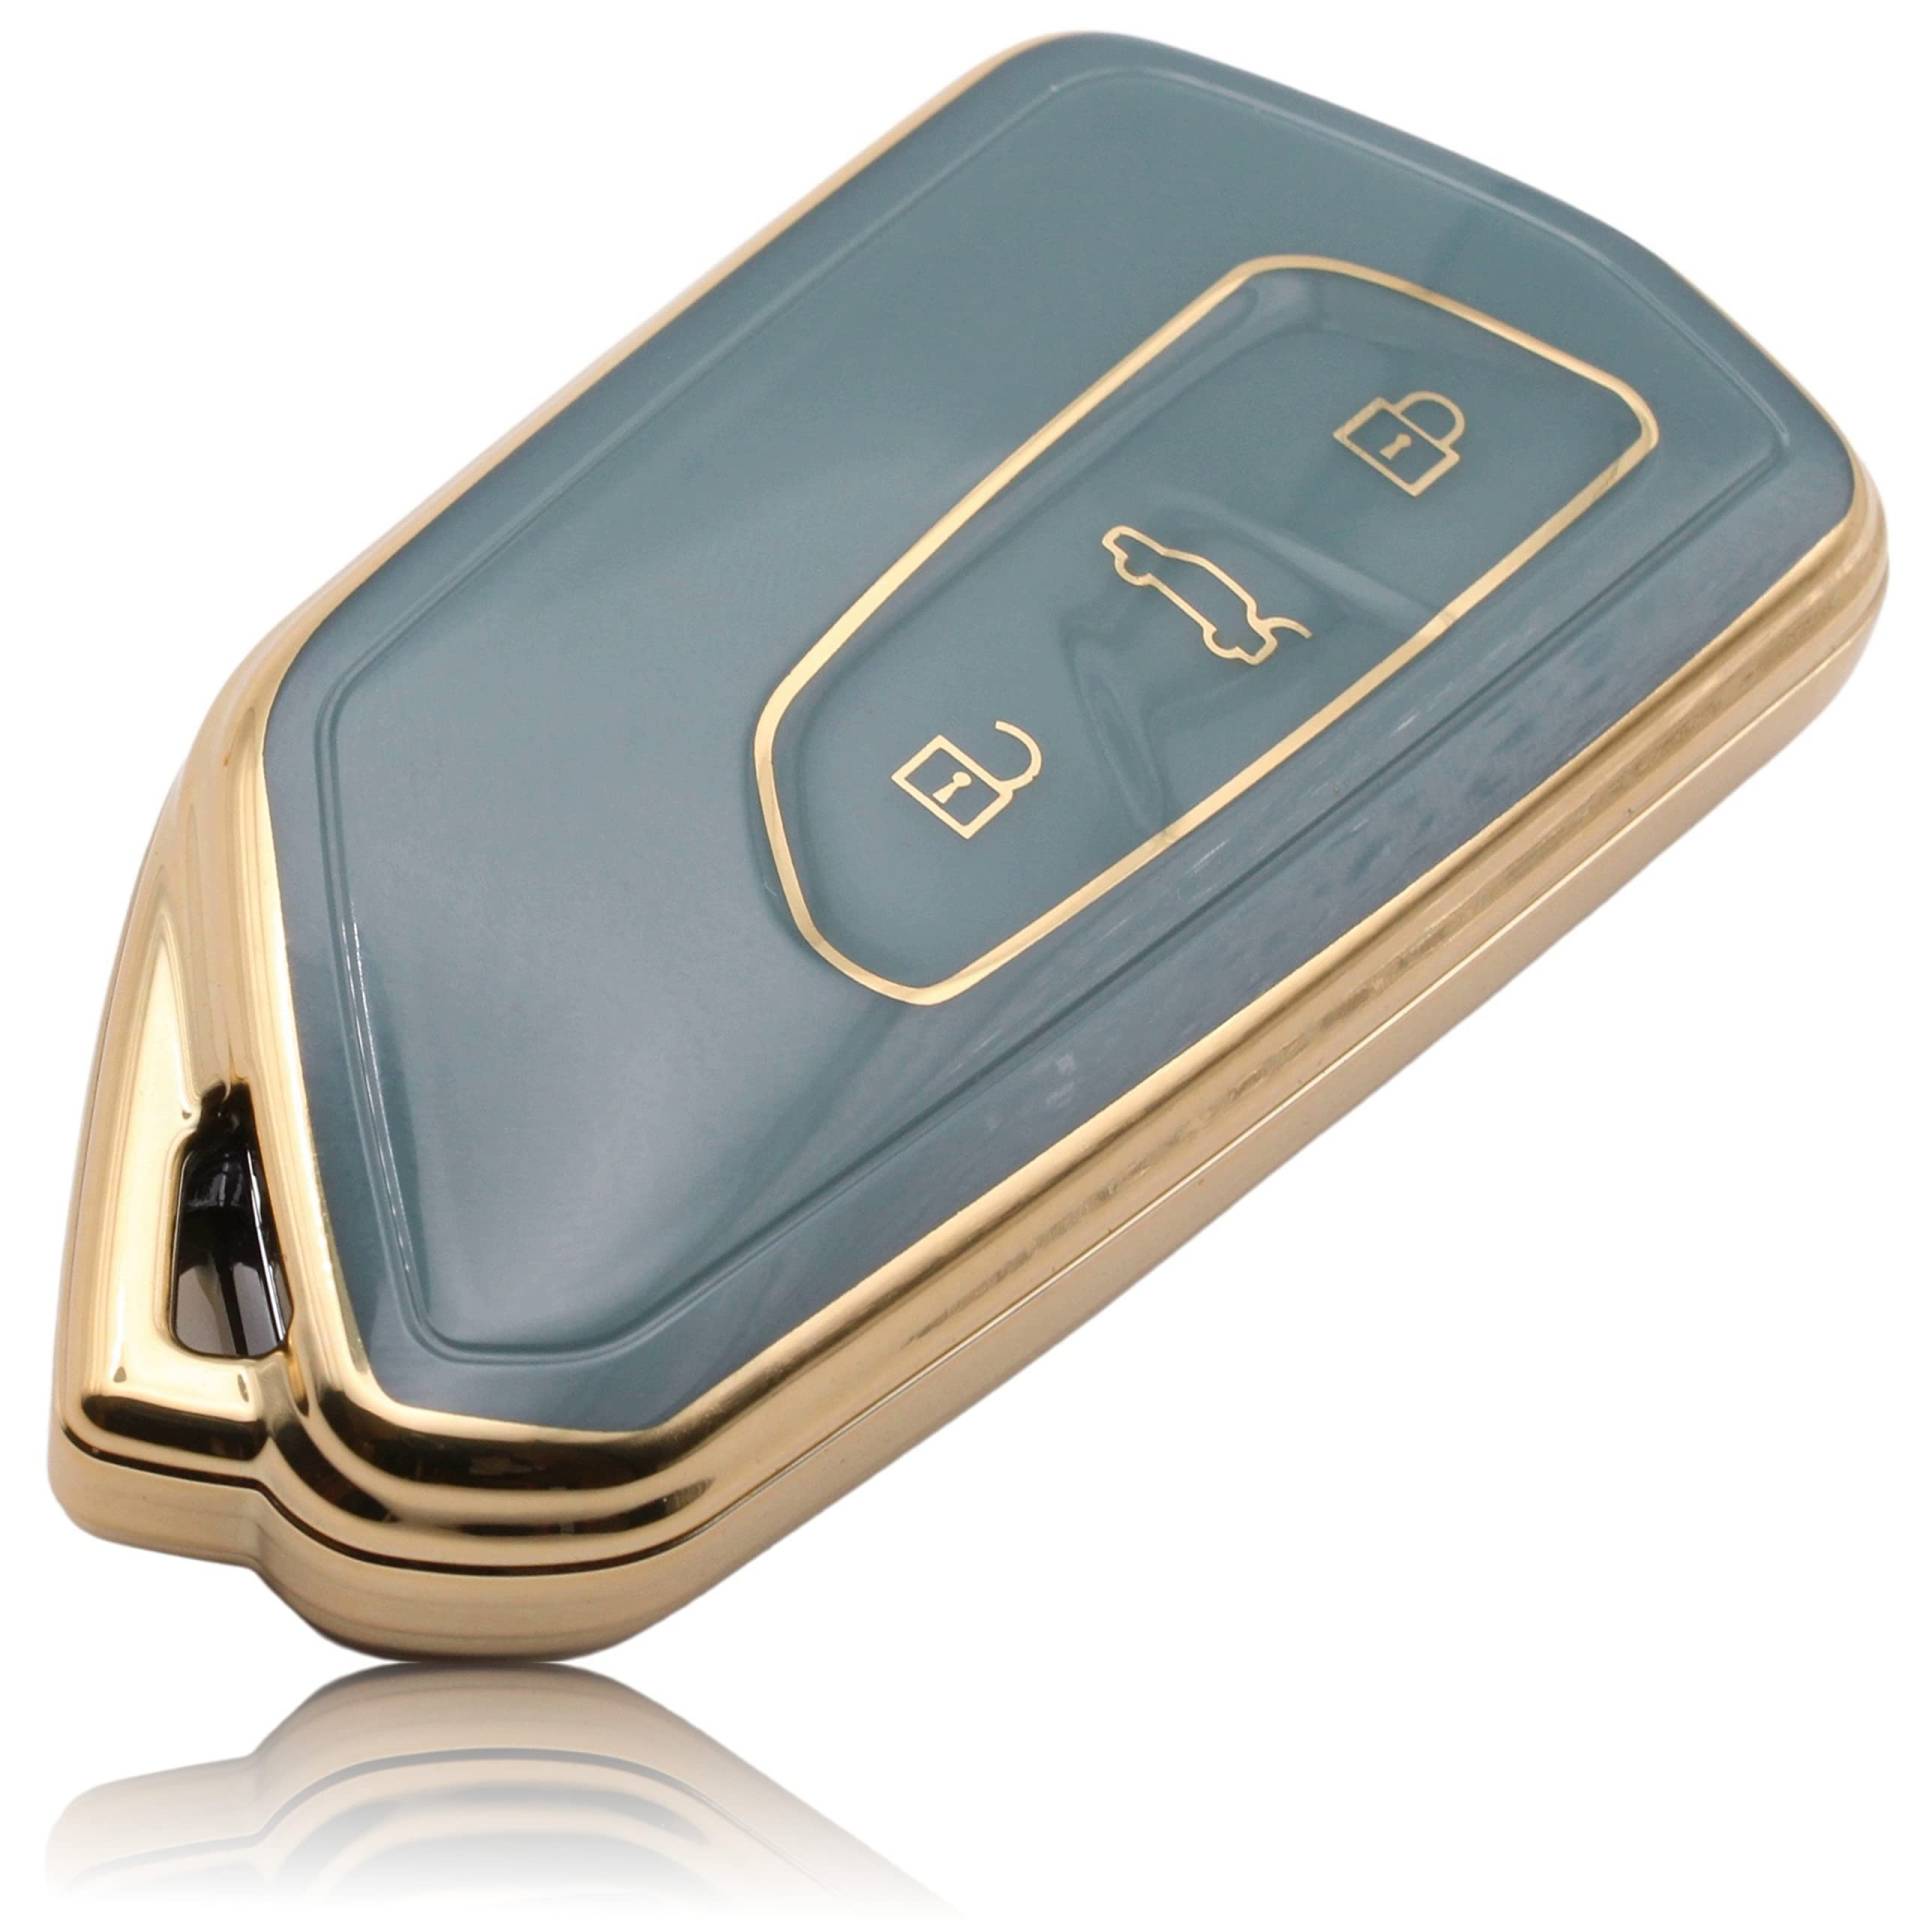 FOAMO Autoschlüssel Hülle Kompatibel mit VW, SEAT, Skoda, Cupra Autoschlüssel - TPU Schlüsselhülle - Schlüsselhülle - Schutz für Autoschlüssel Blau von FOAMO